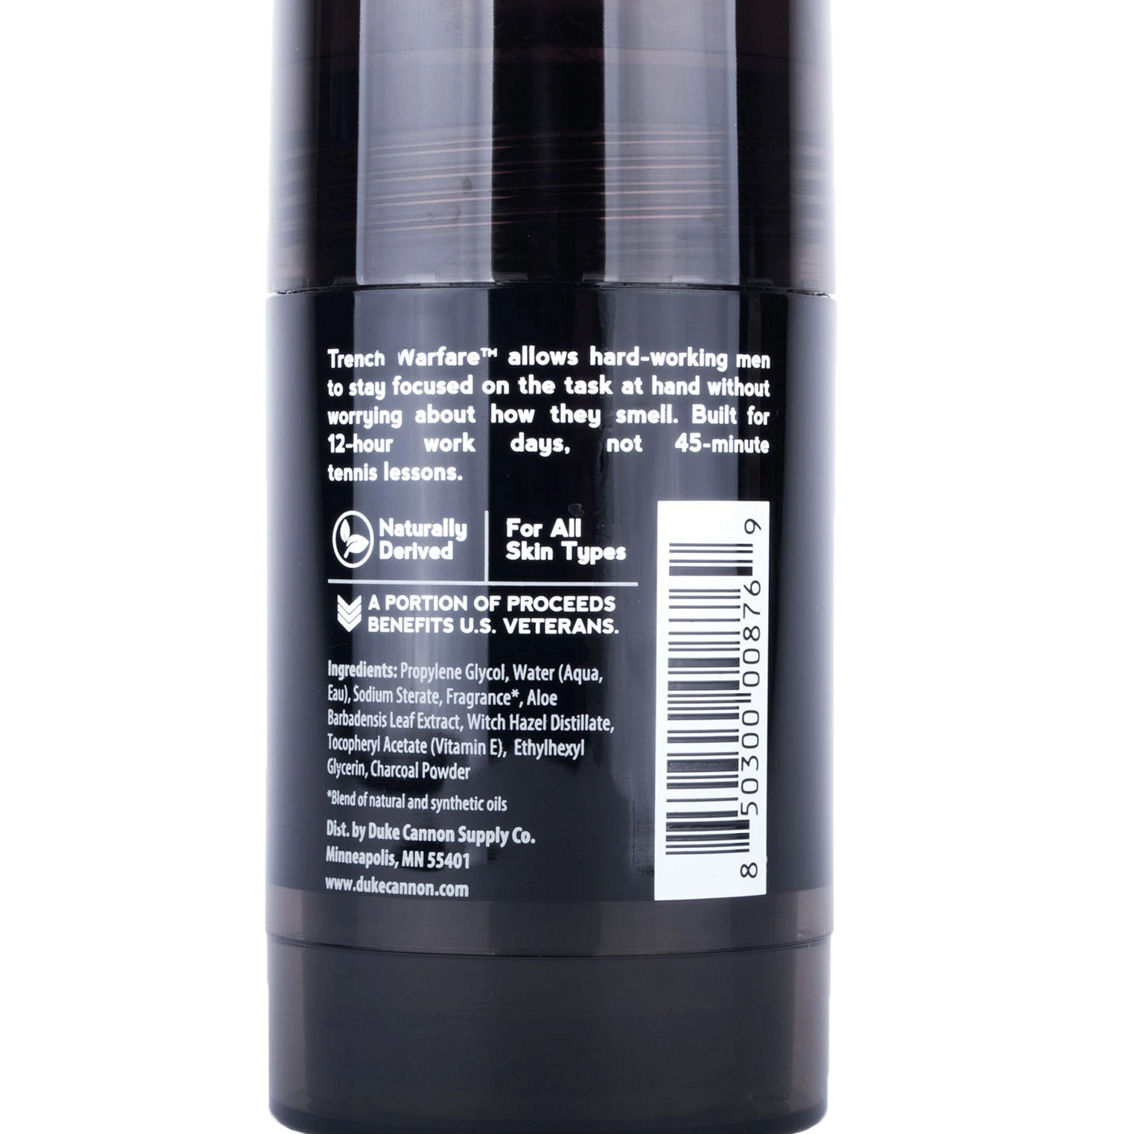 Duke Cannon Bergamot and Black Pepper Trench Warfare Natural Charcoal Deodorant - Image 2 of 3